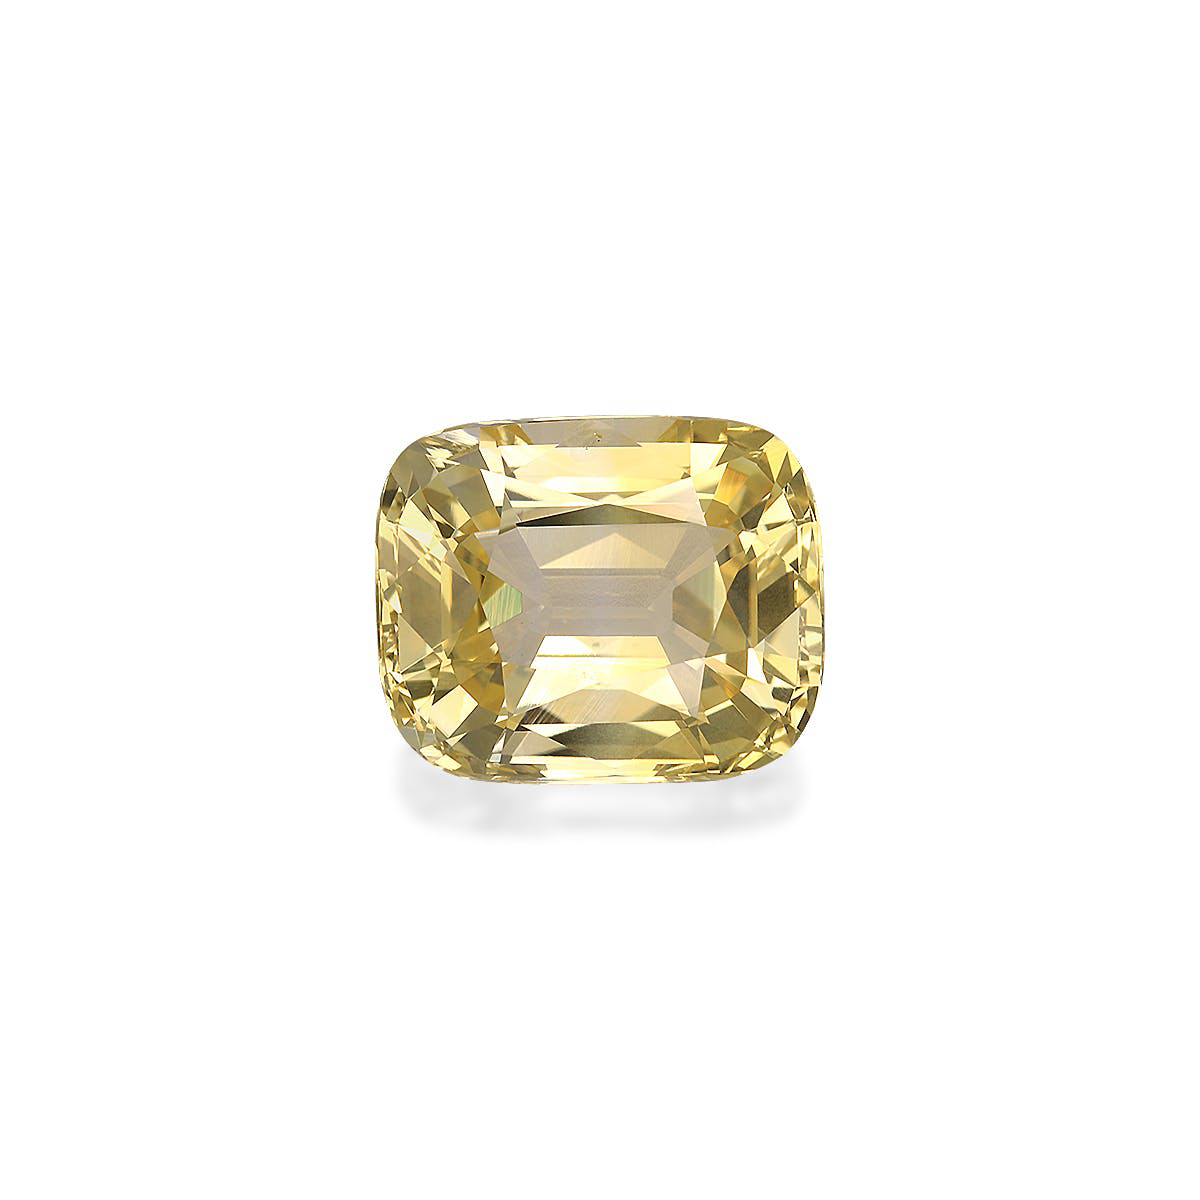 Picture of Yellow Sapphire Unheated Sri Lanka 5.58ct - 11x9mm (YS0026)